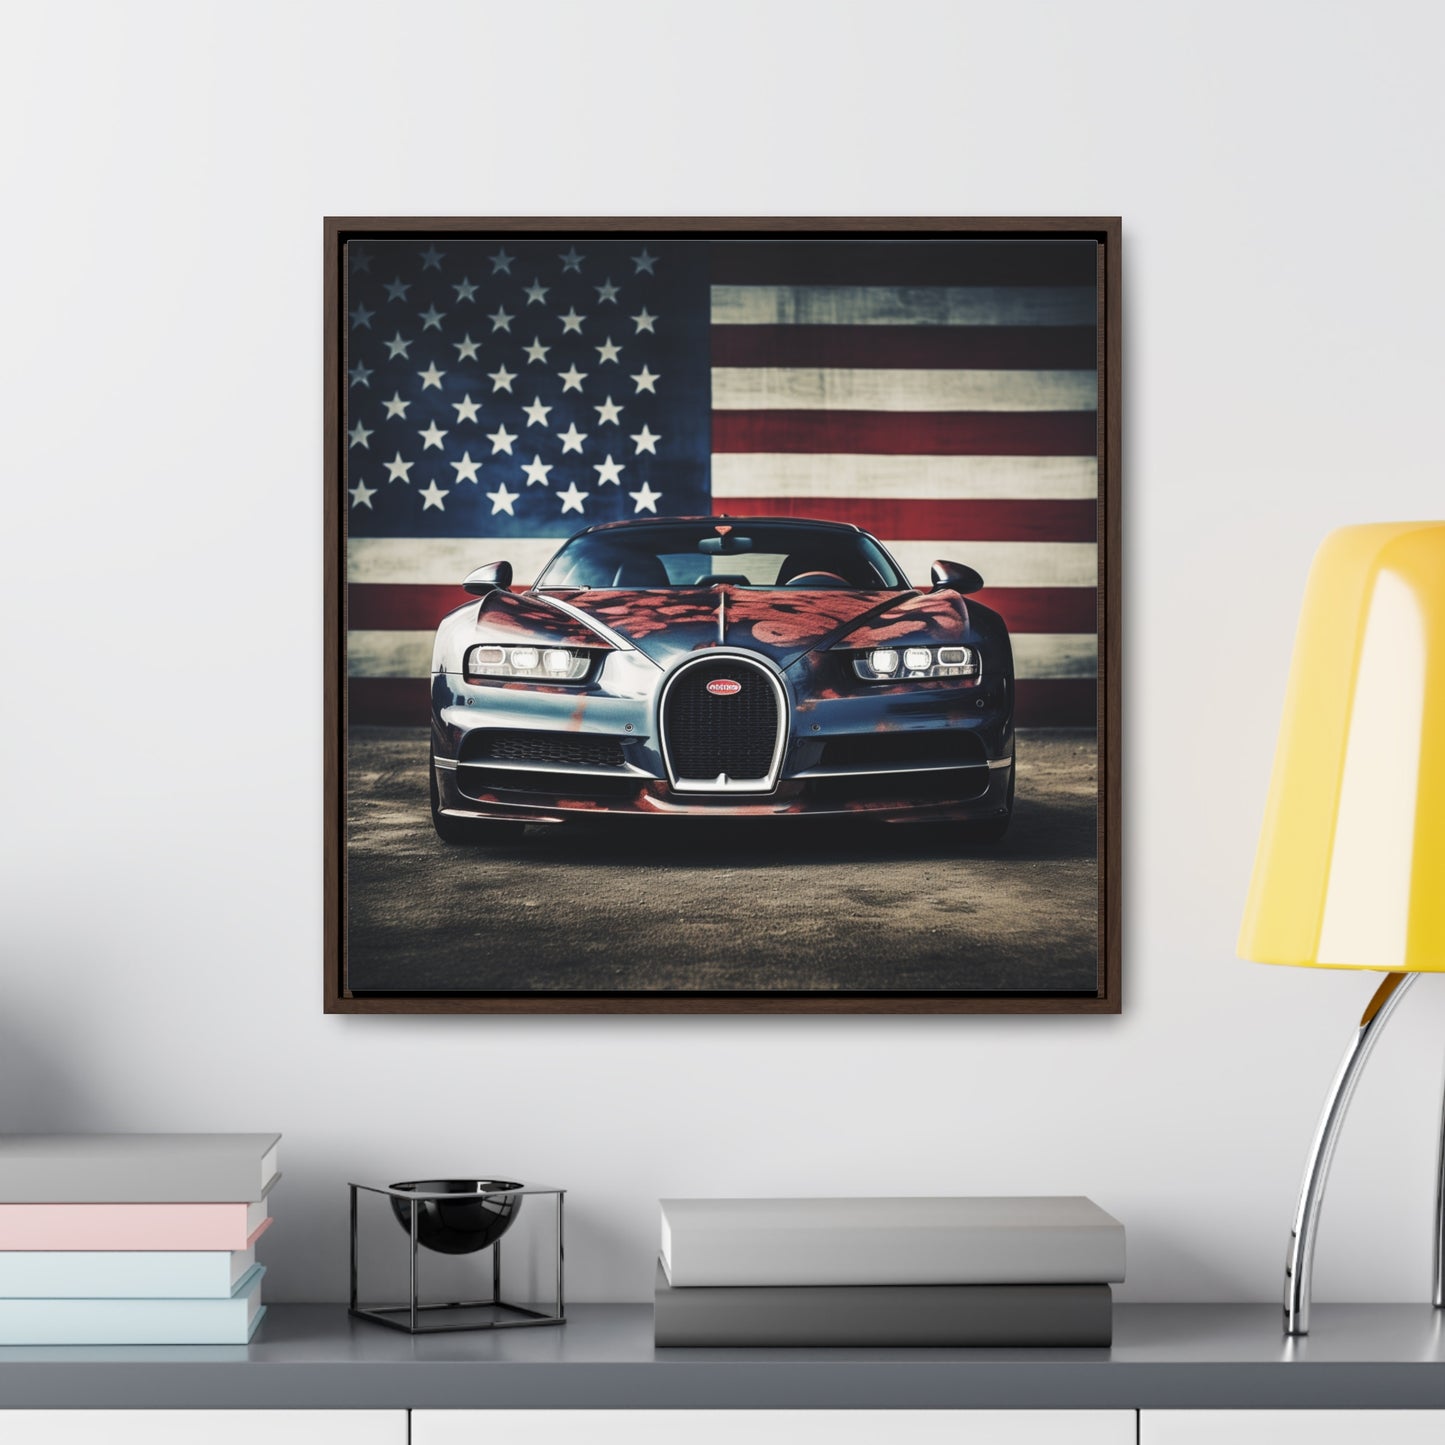 Gallery Canvas Wraps, Square Frame Bugatti Flag 3